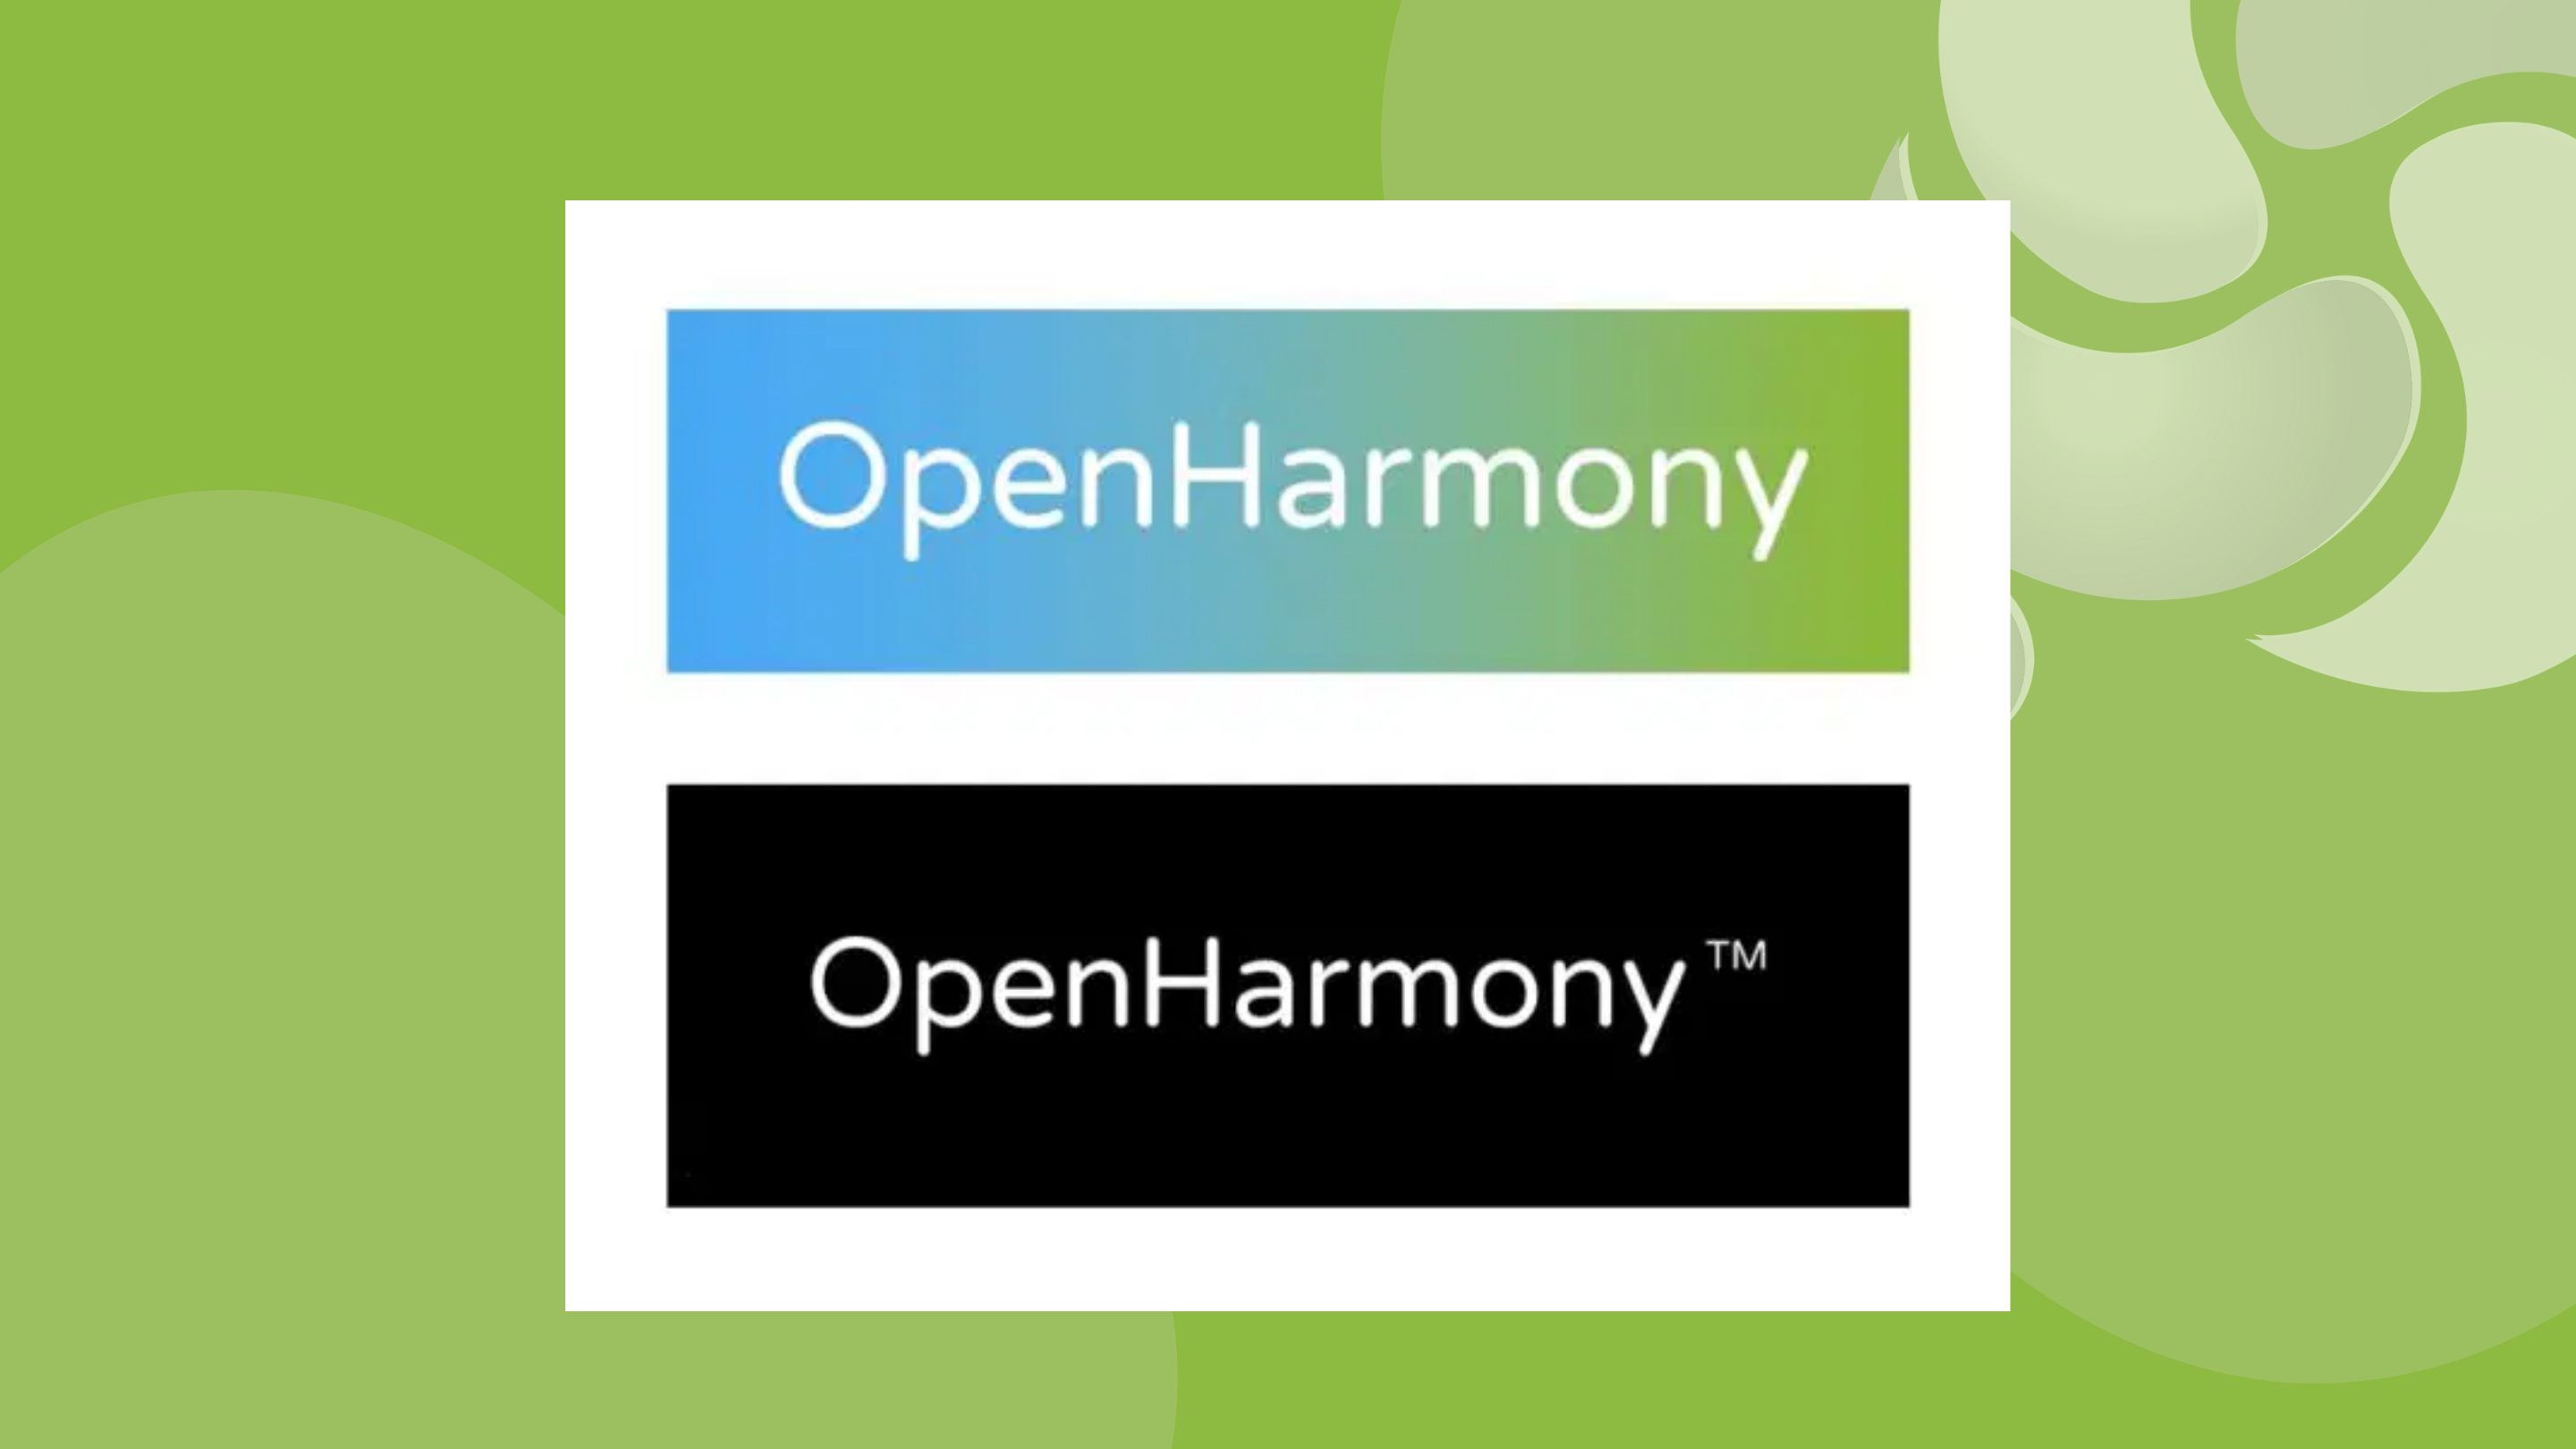 huawei-lanca-a-versao-3-1-do-sistema-operacional-de-codigo-aberto-openharmony